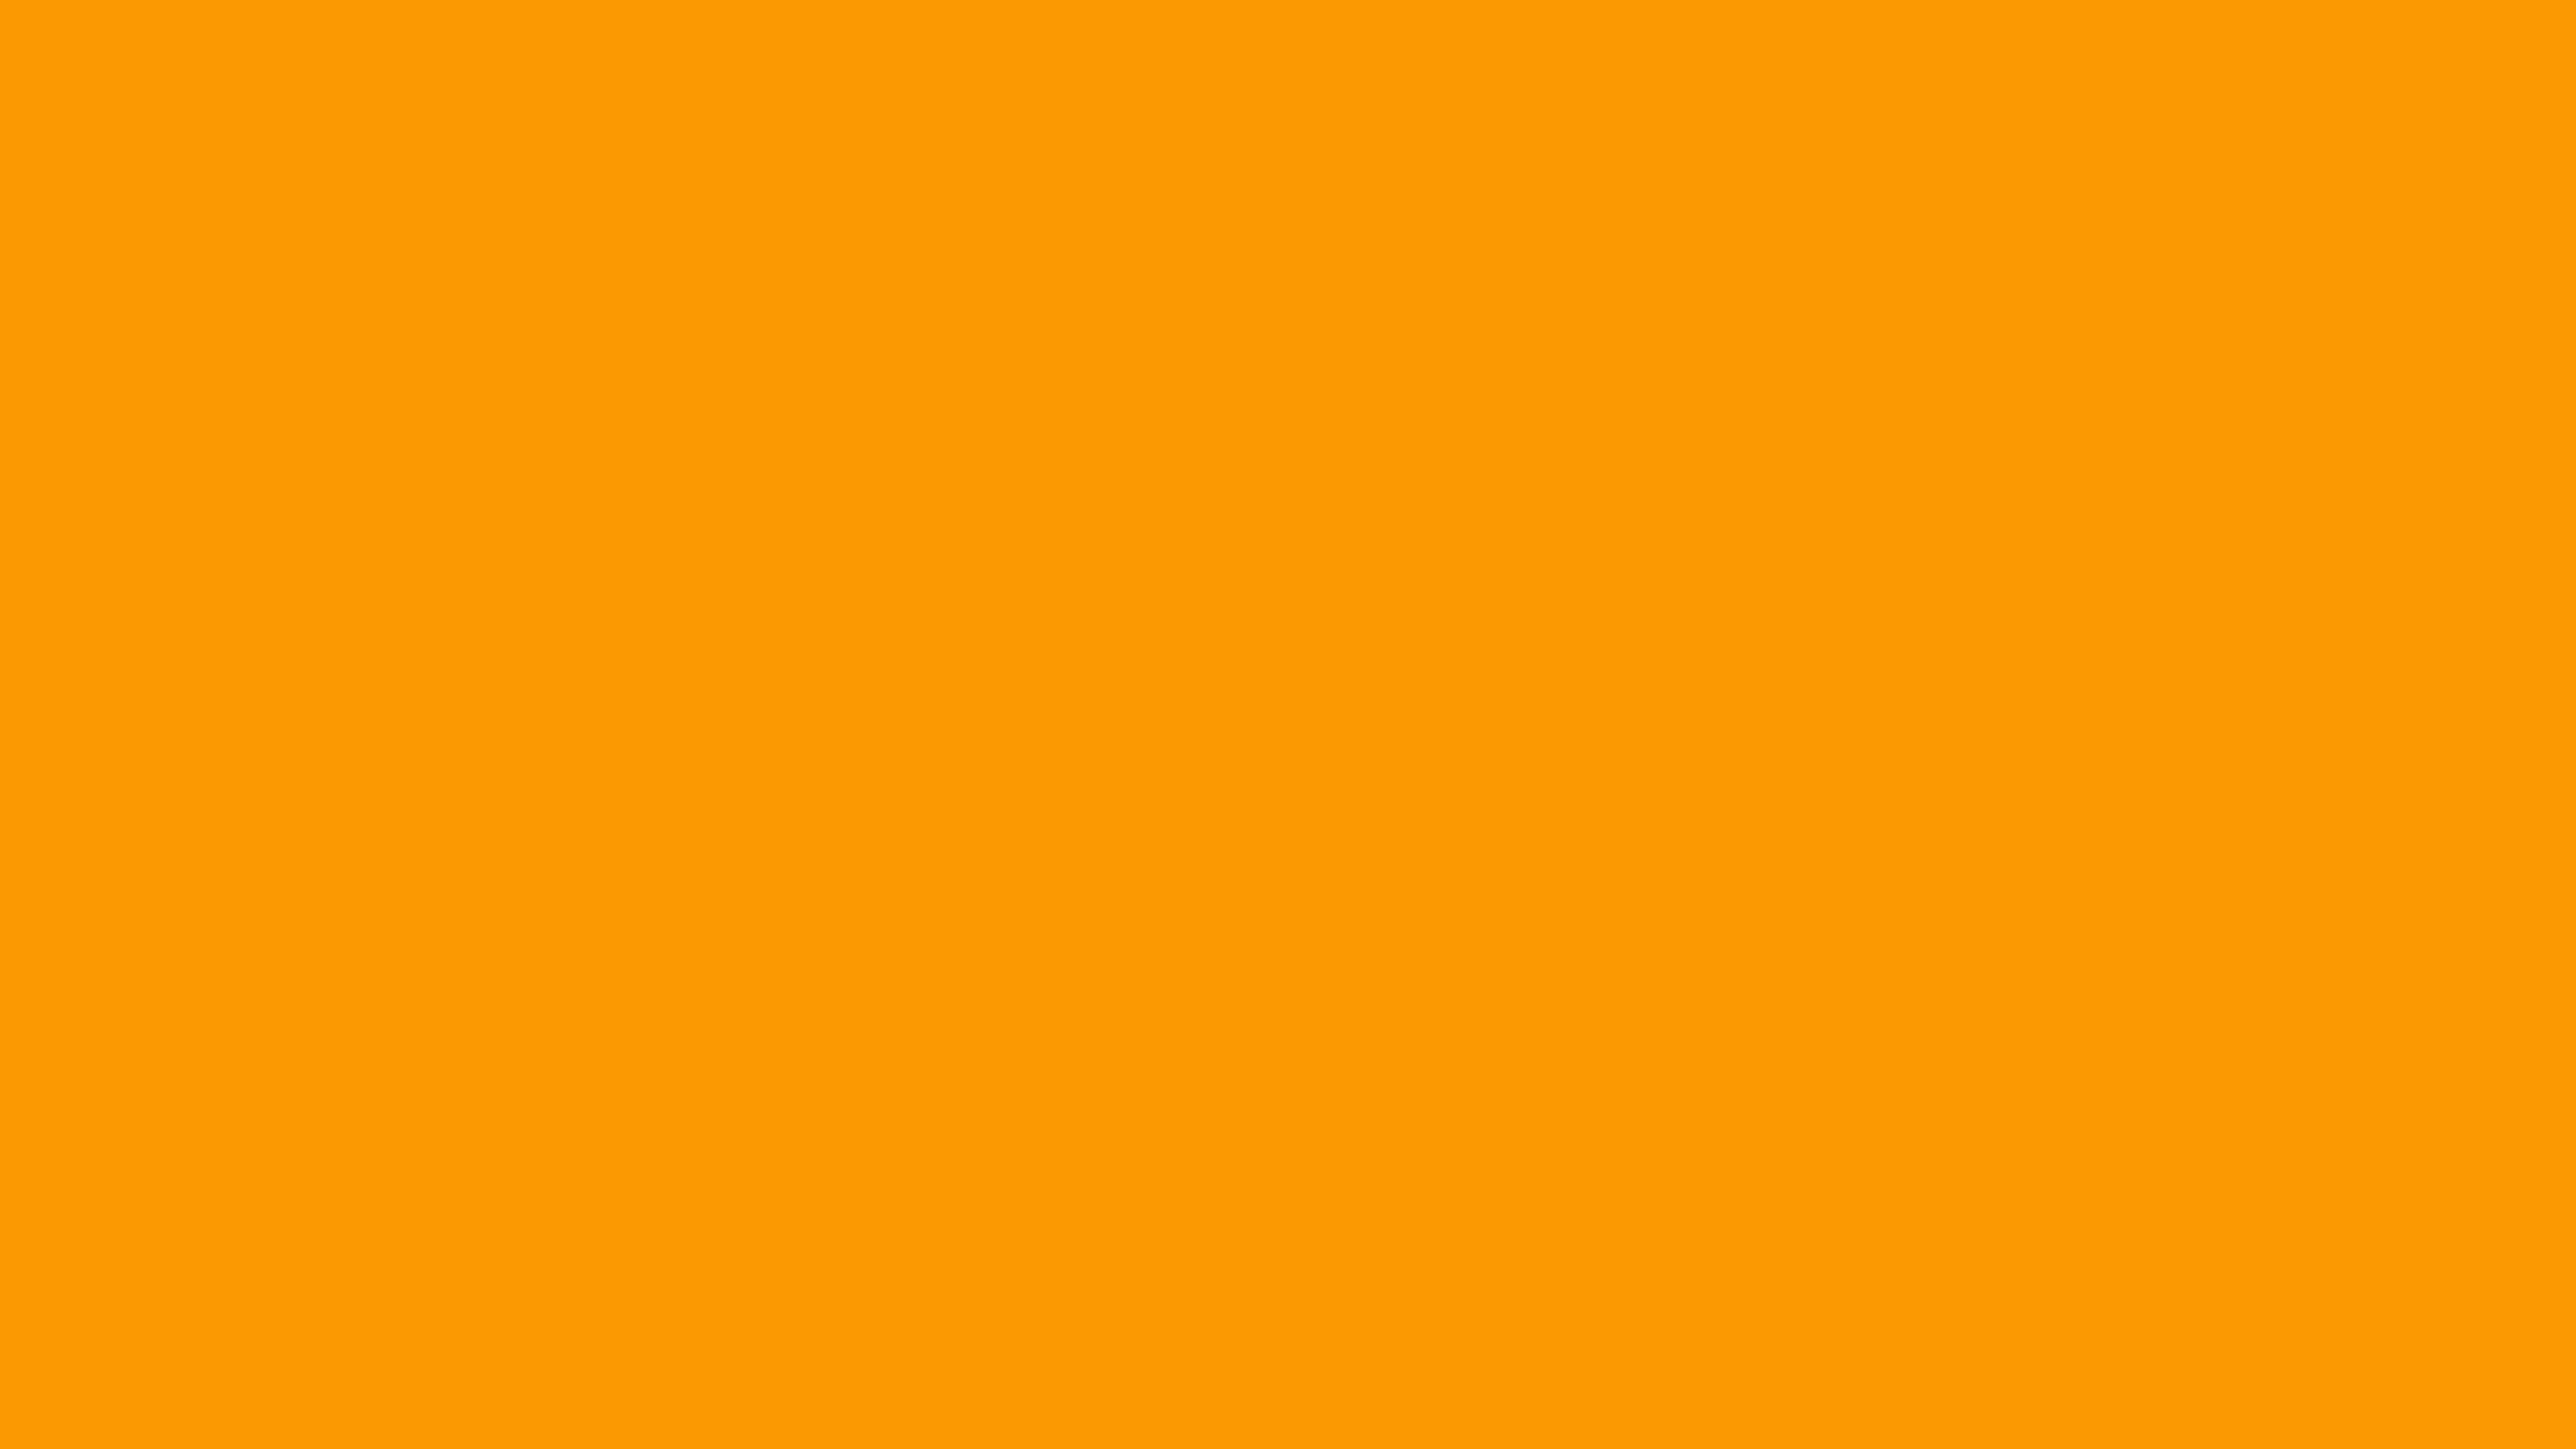 4096x2304 Orange RYB Solid Color Background